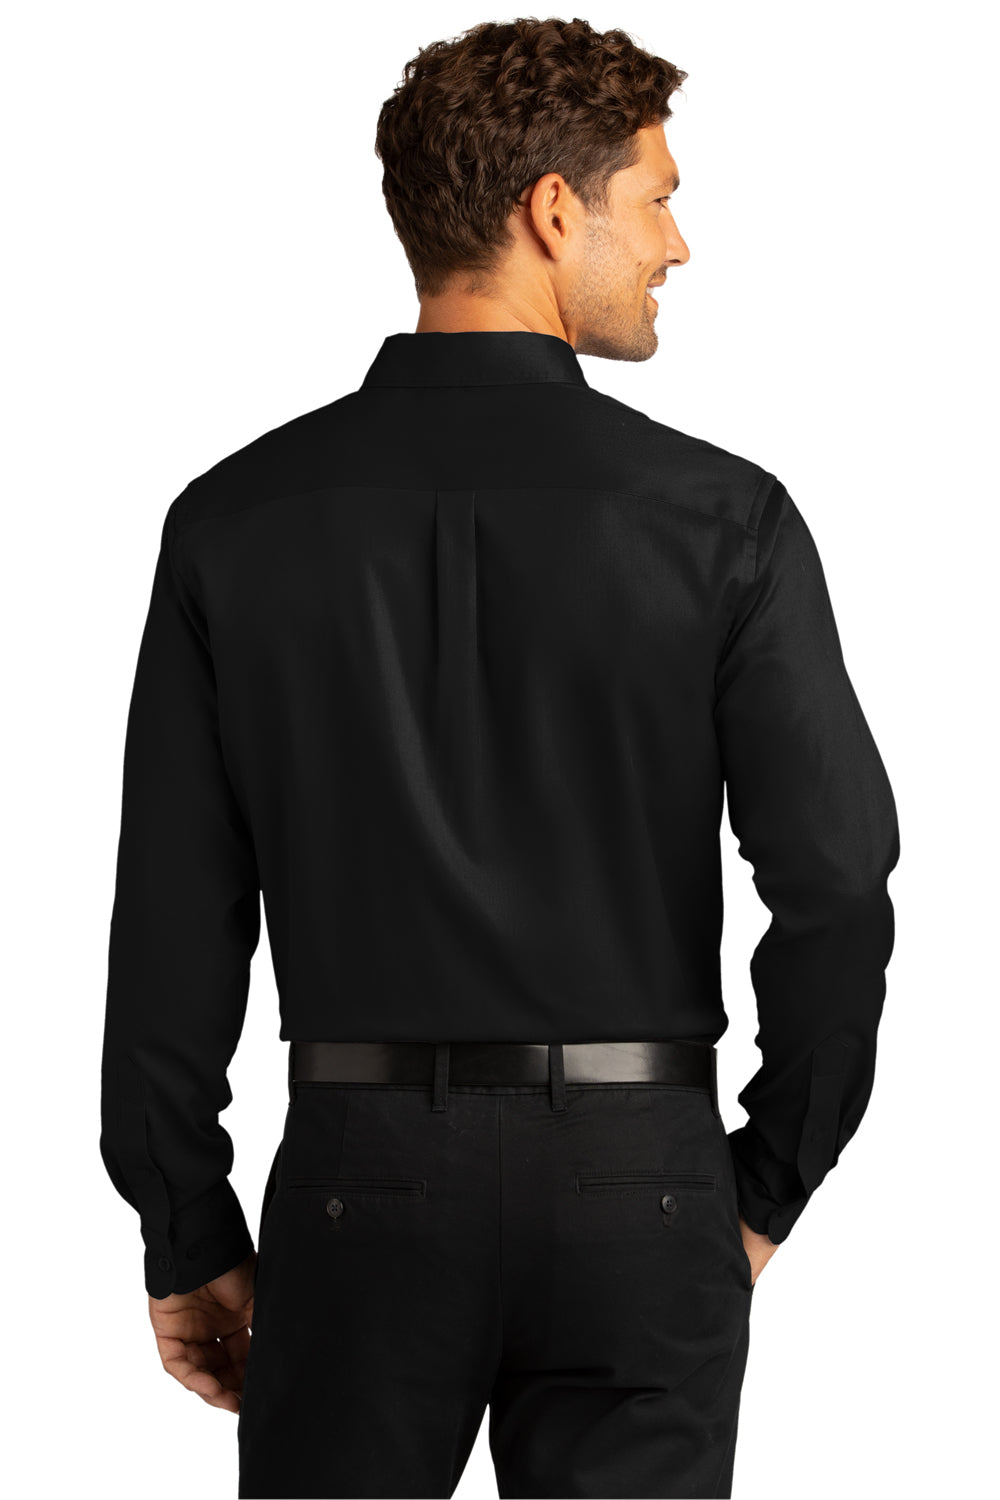 Port Authority Mens SuperPro Wrinkle Resistant React Long Sleeve Button Down Shirt w/ Pocket Deep Black Side